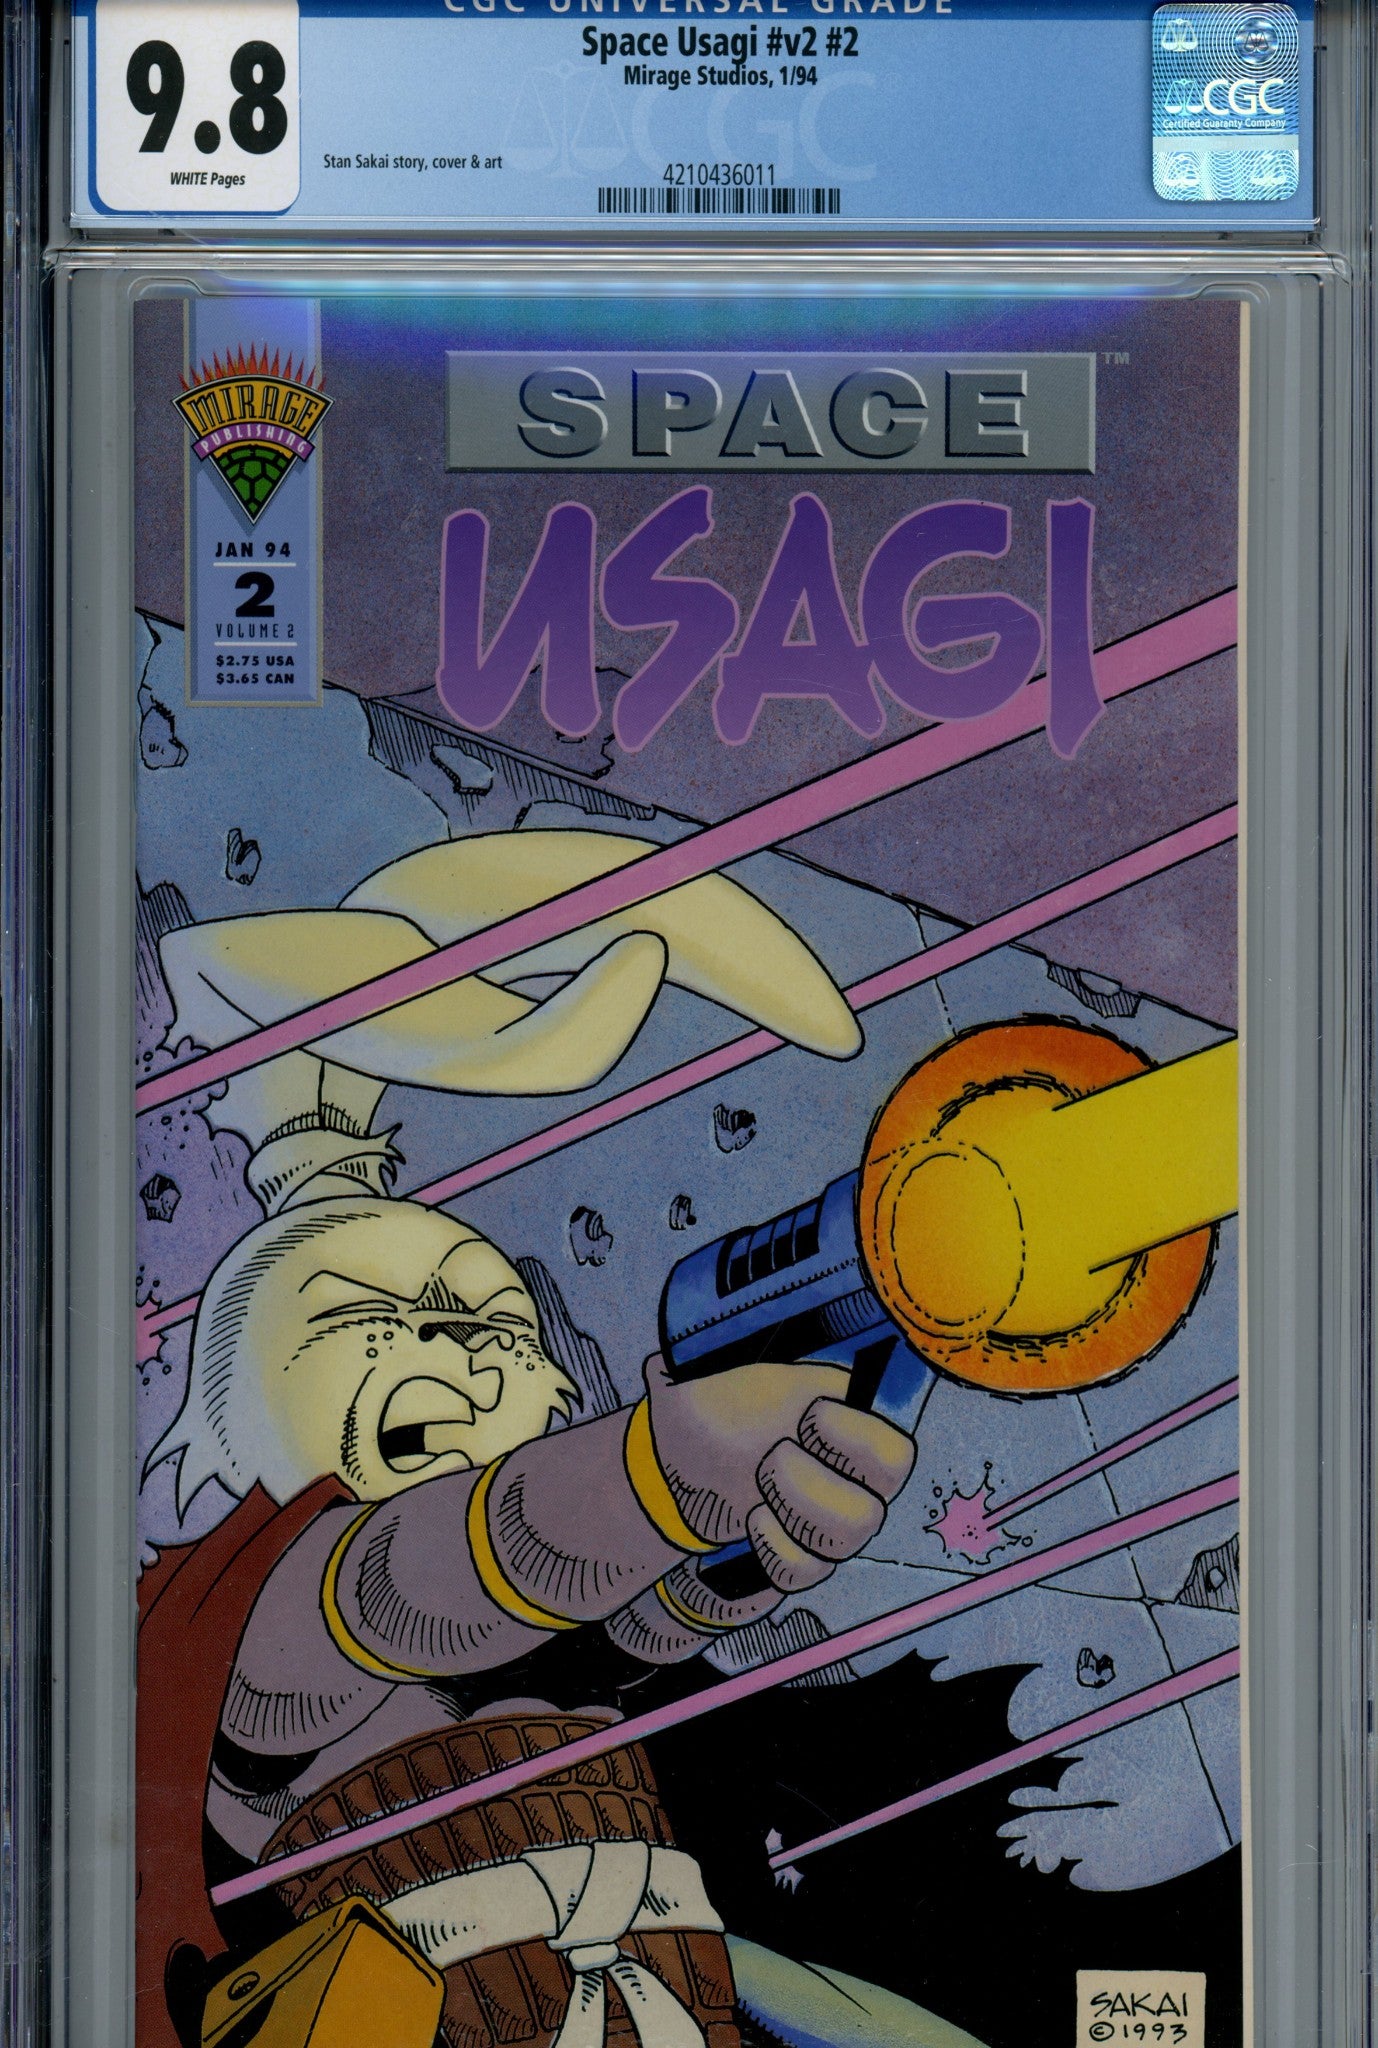 Space Usagi Vol 2 2 CGC 9.8 (1994)